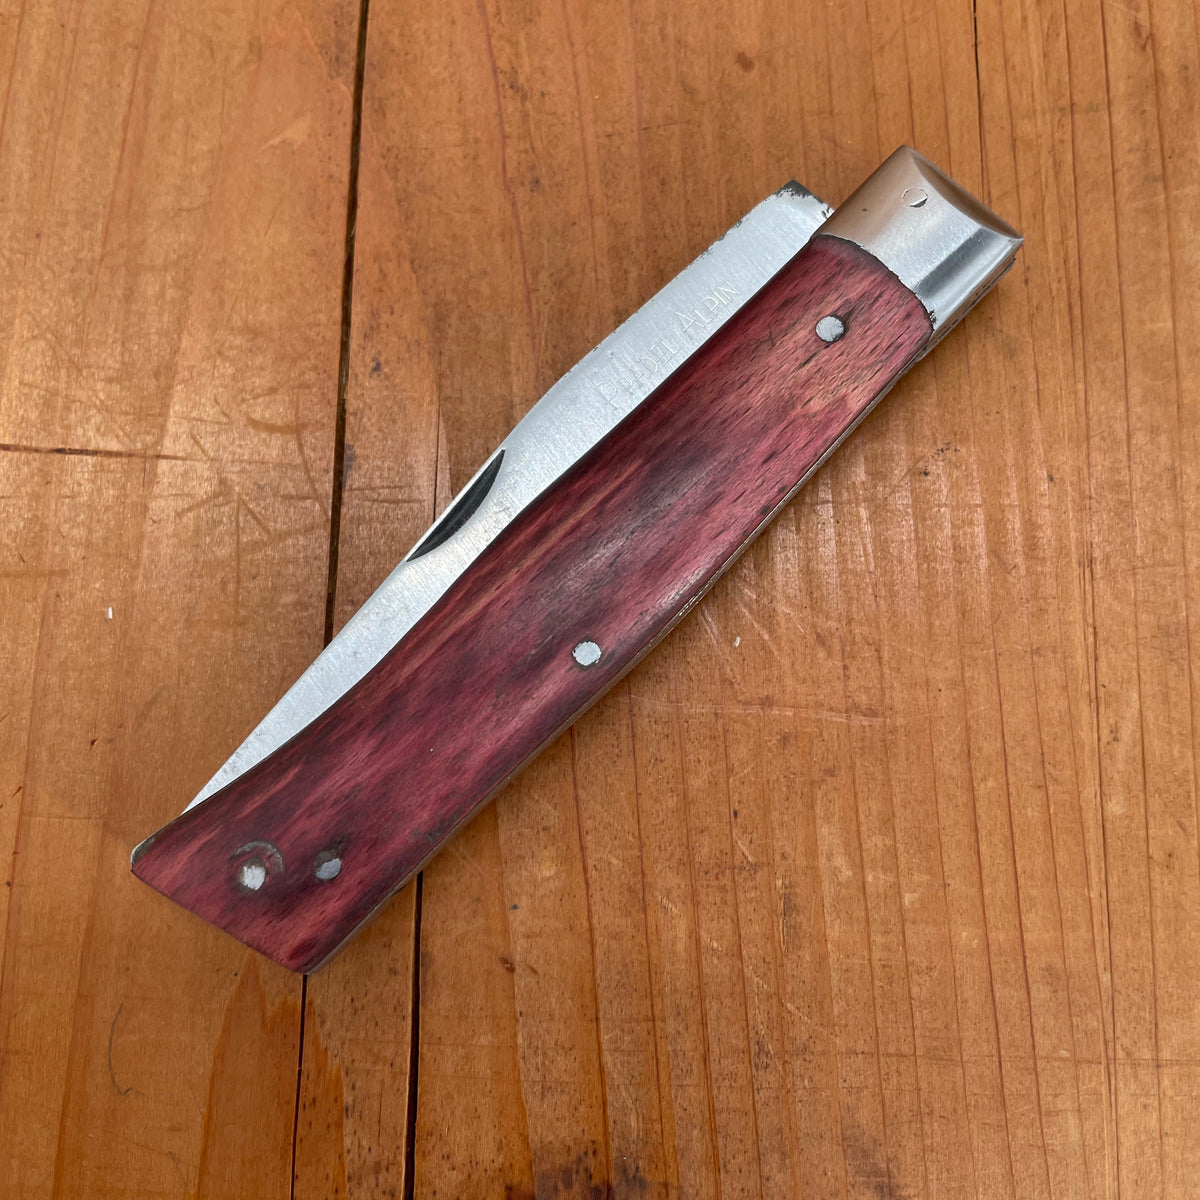 Collas-Pradel-Dozolme New Vintage 4" Alpin Knife Chabreloche 1950's